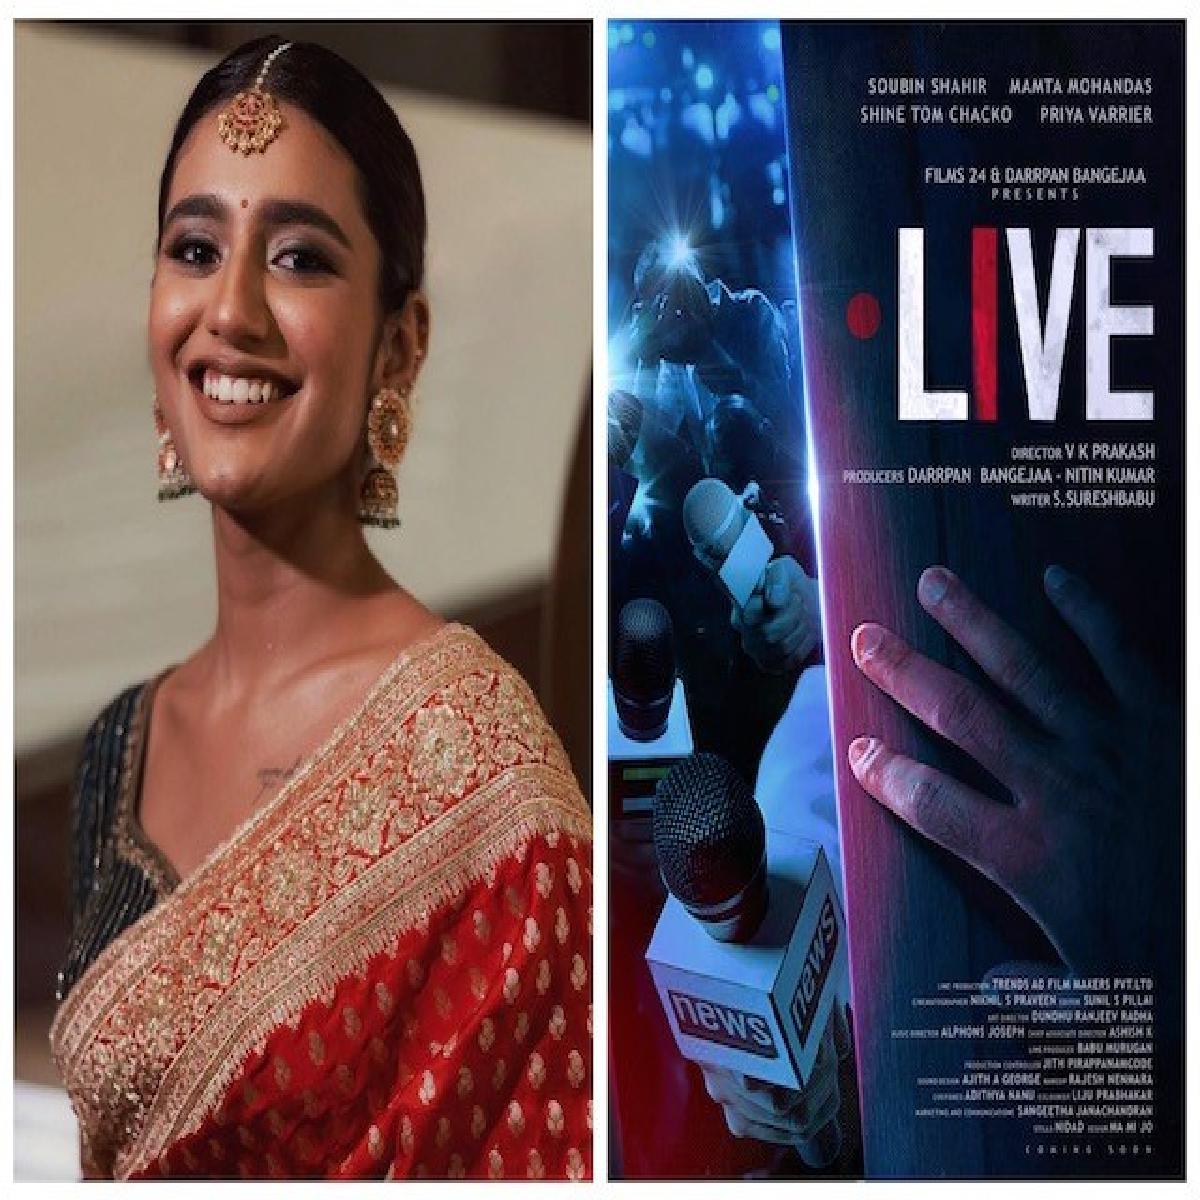 Priya Prakash Varrier Announces Live, On Mamta Mohandas’s Birthday